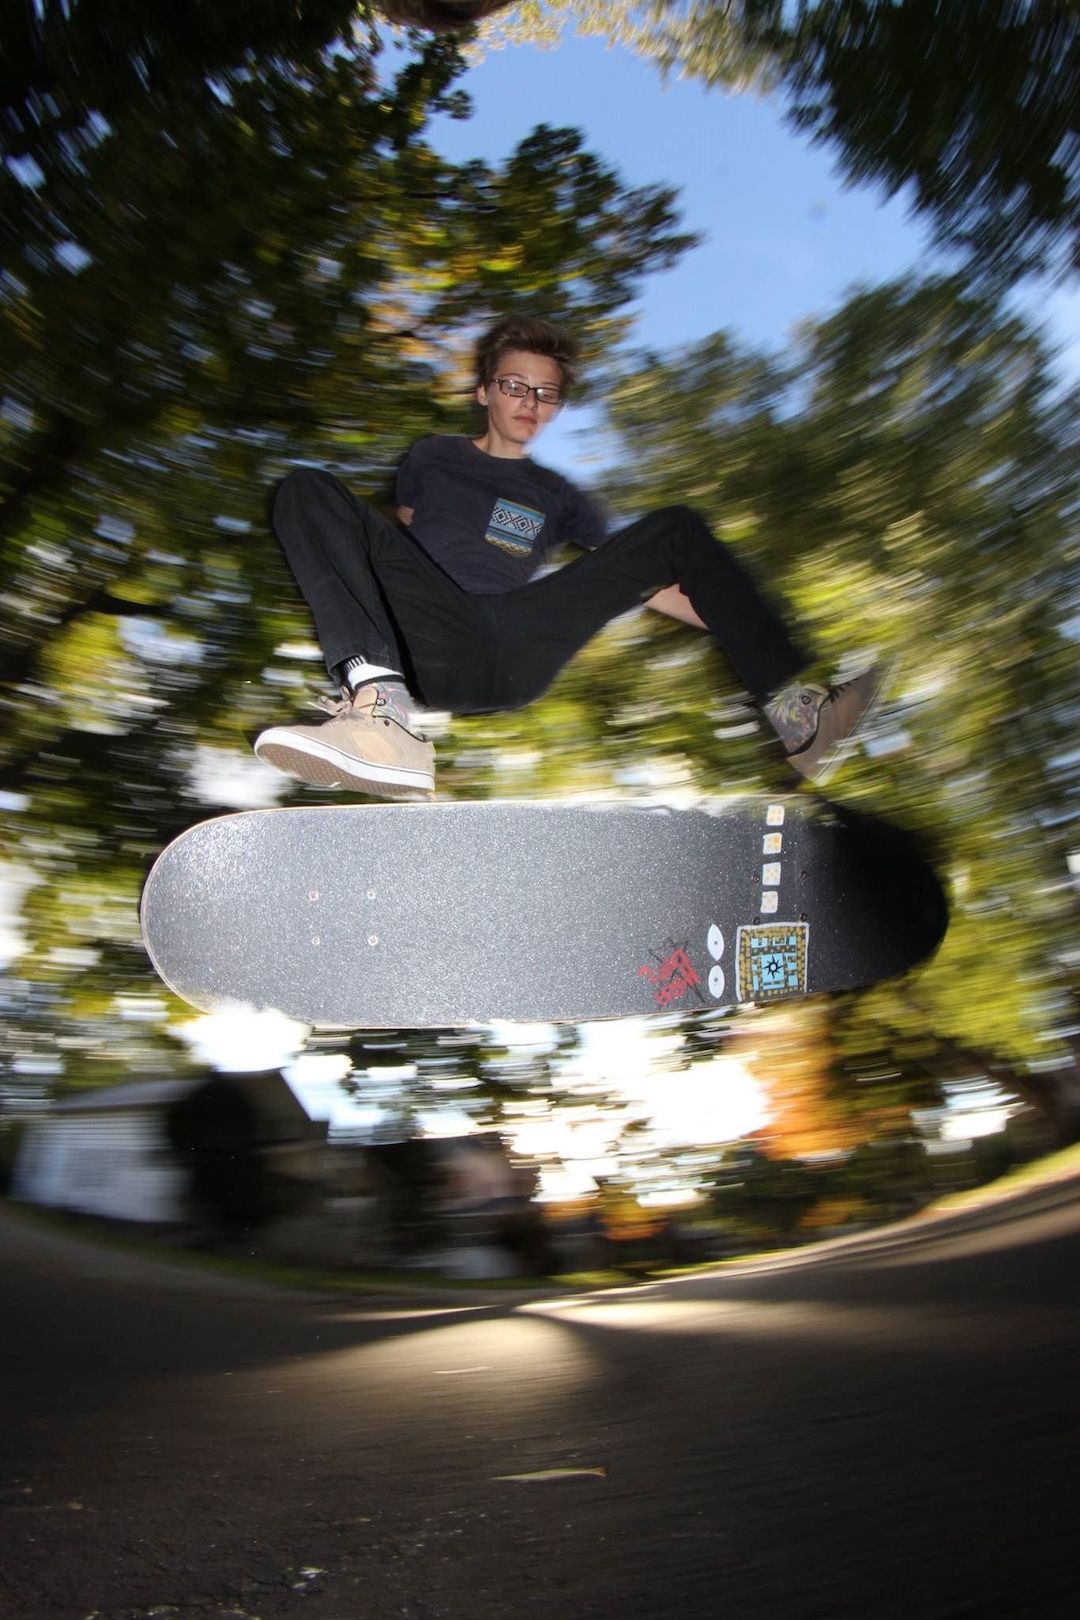 A skateboarder does a kickflip.